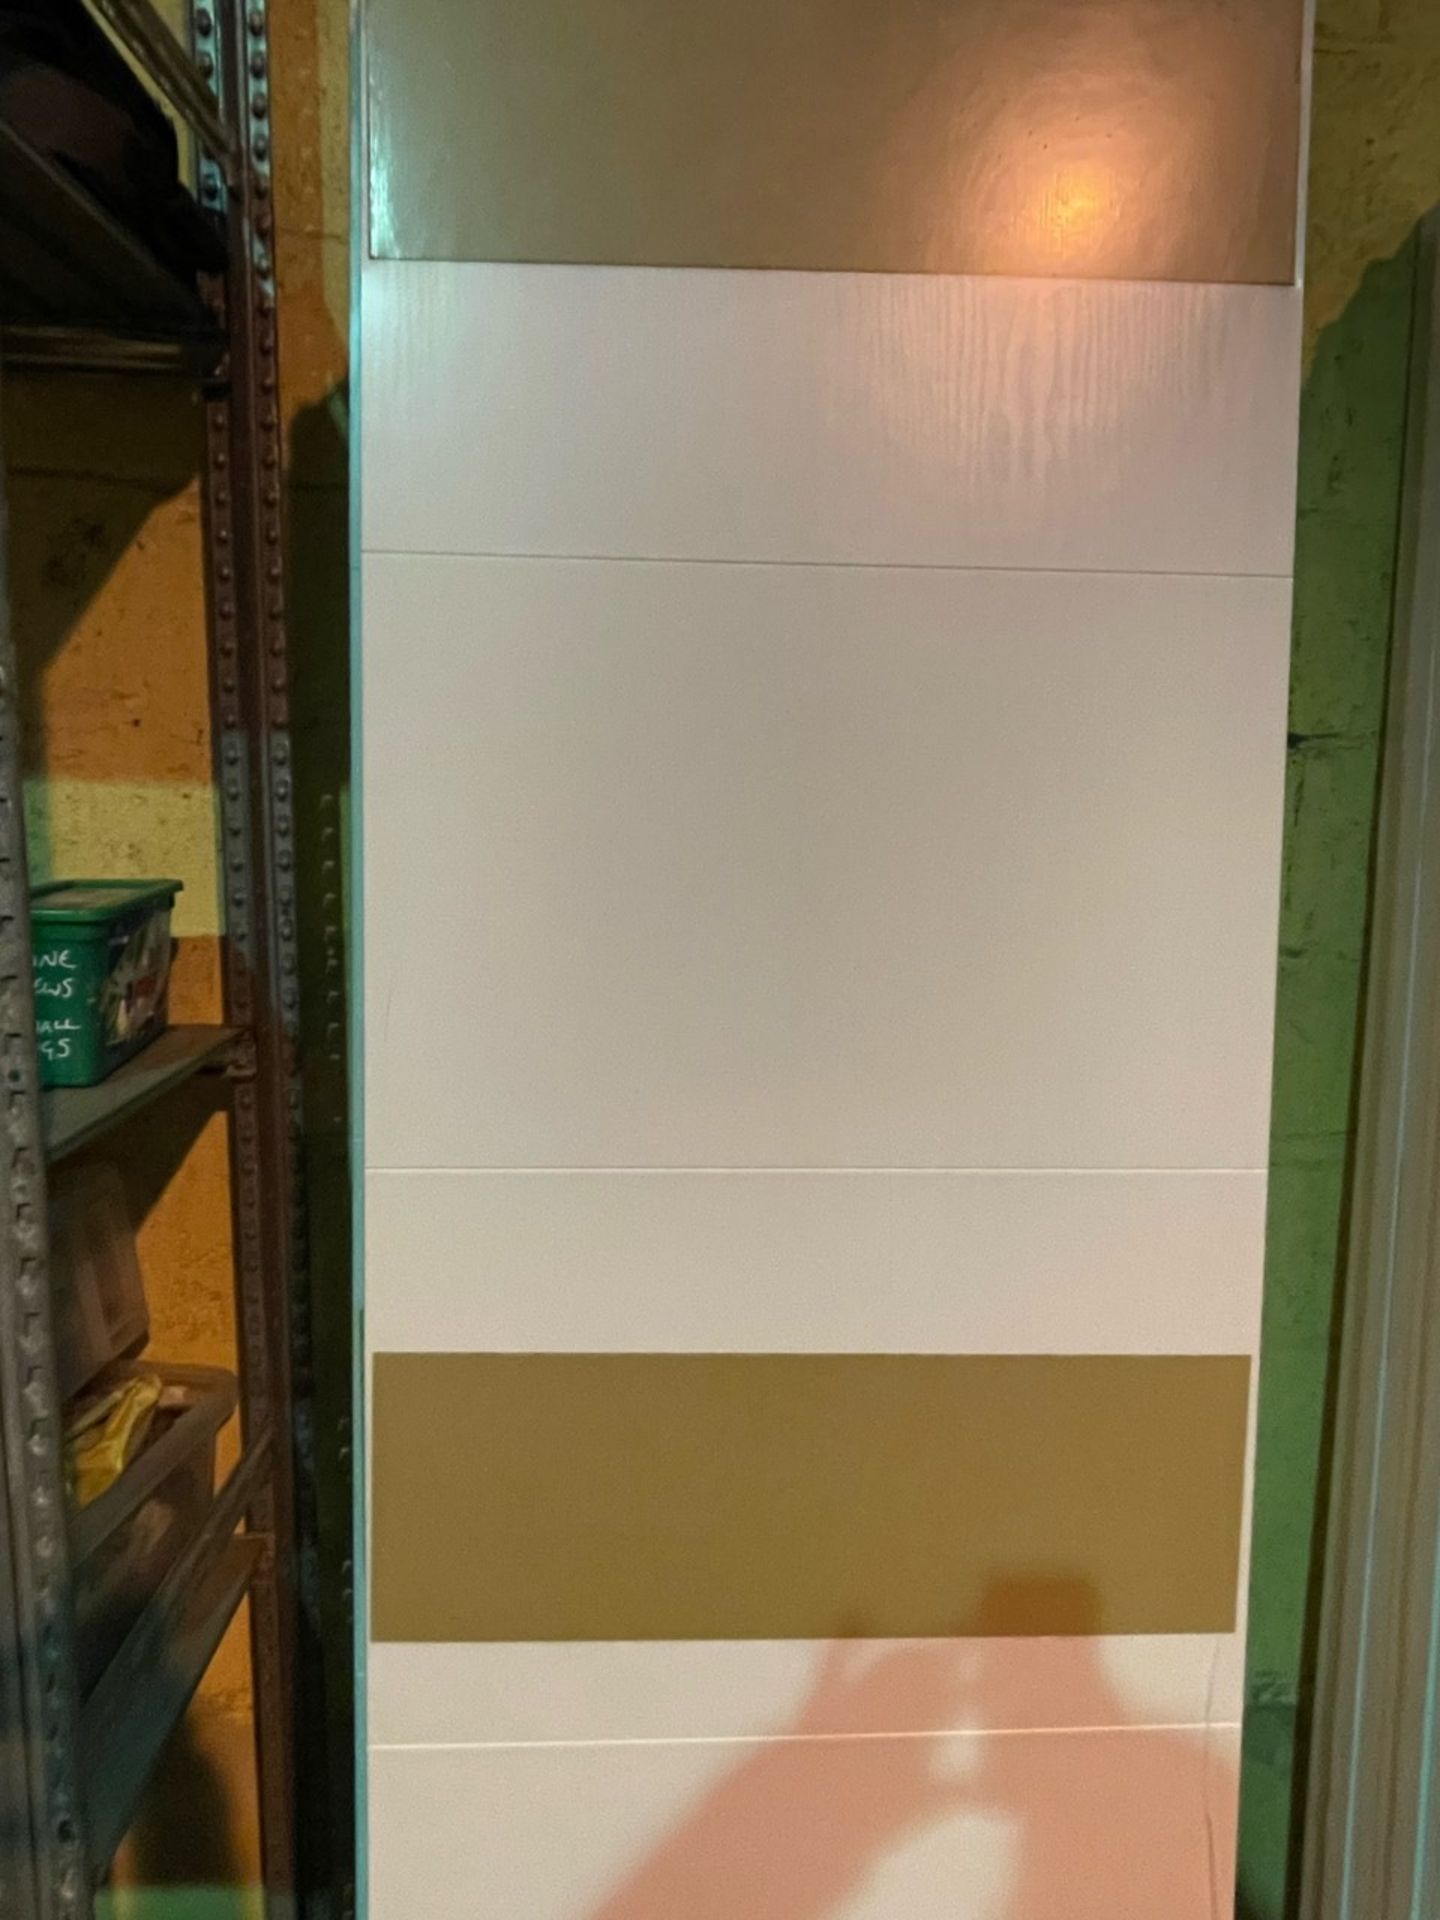 1x new internal door G4H White wood grain 1981 x 610 x 35mm